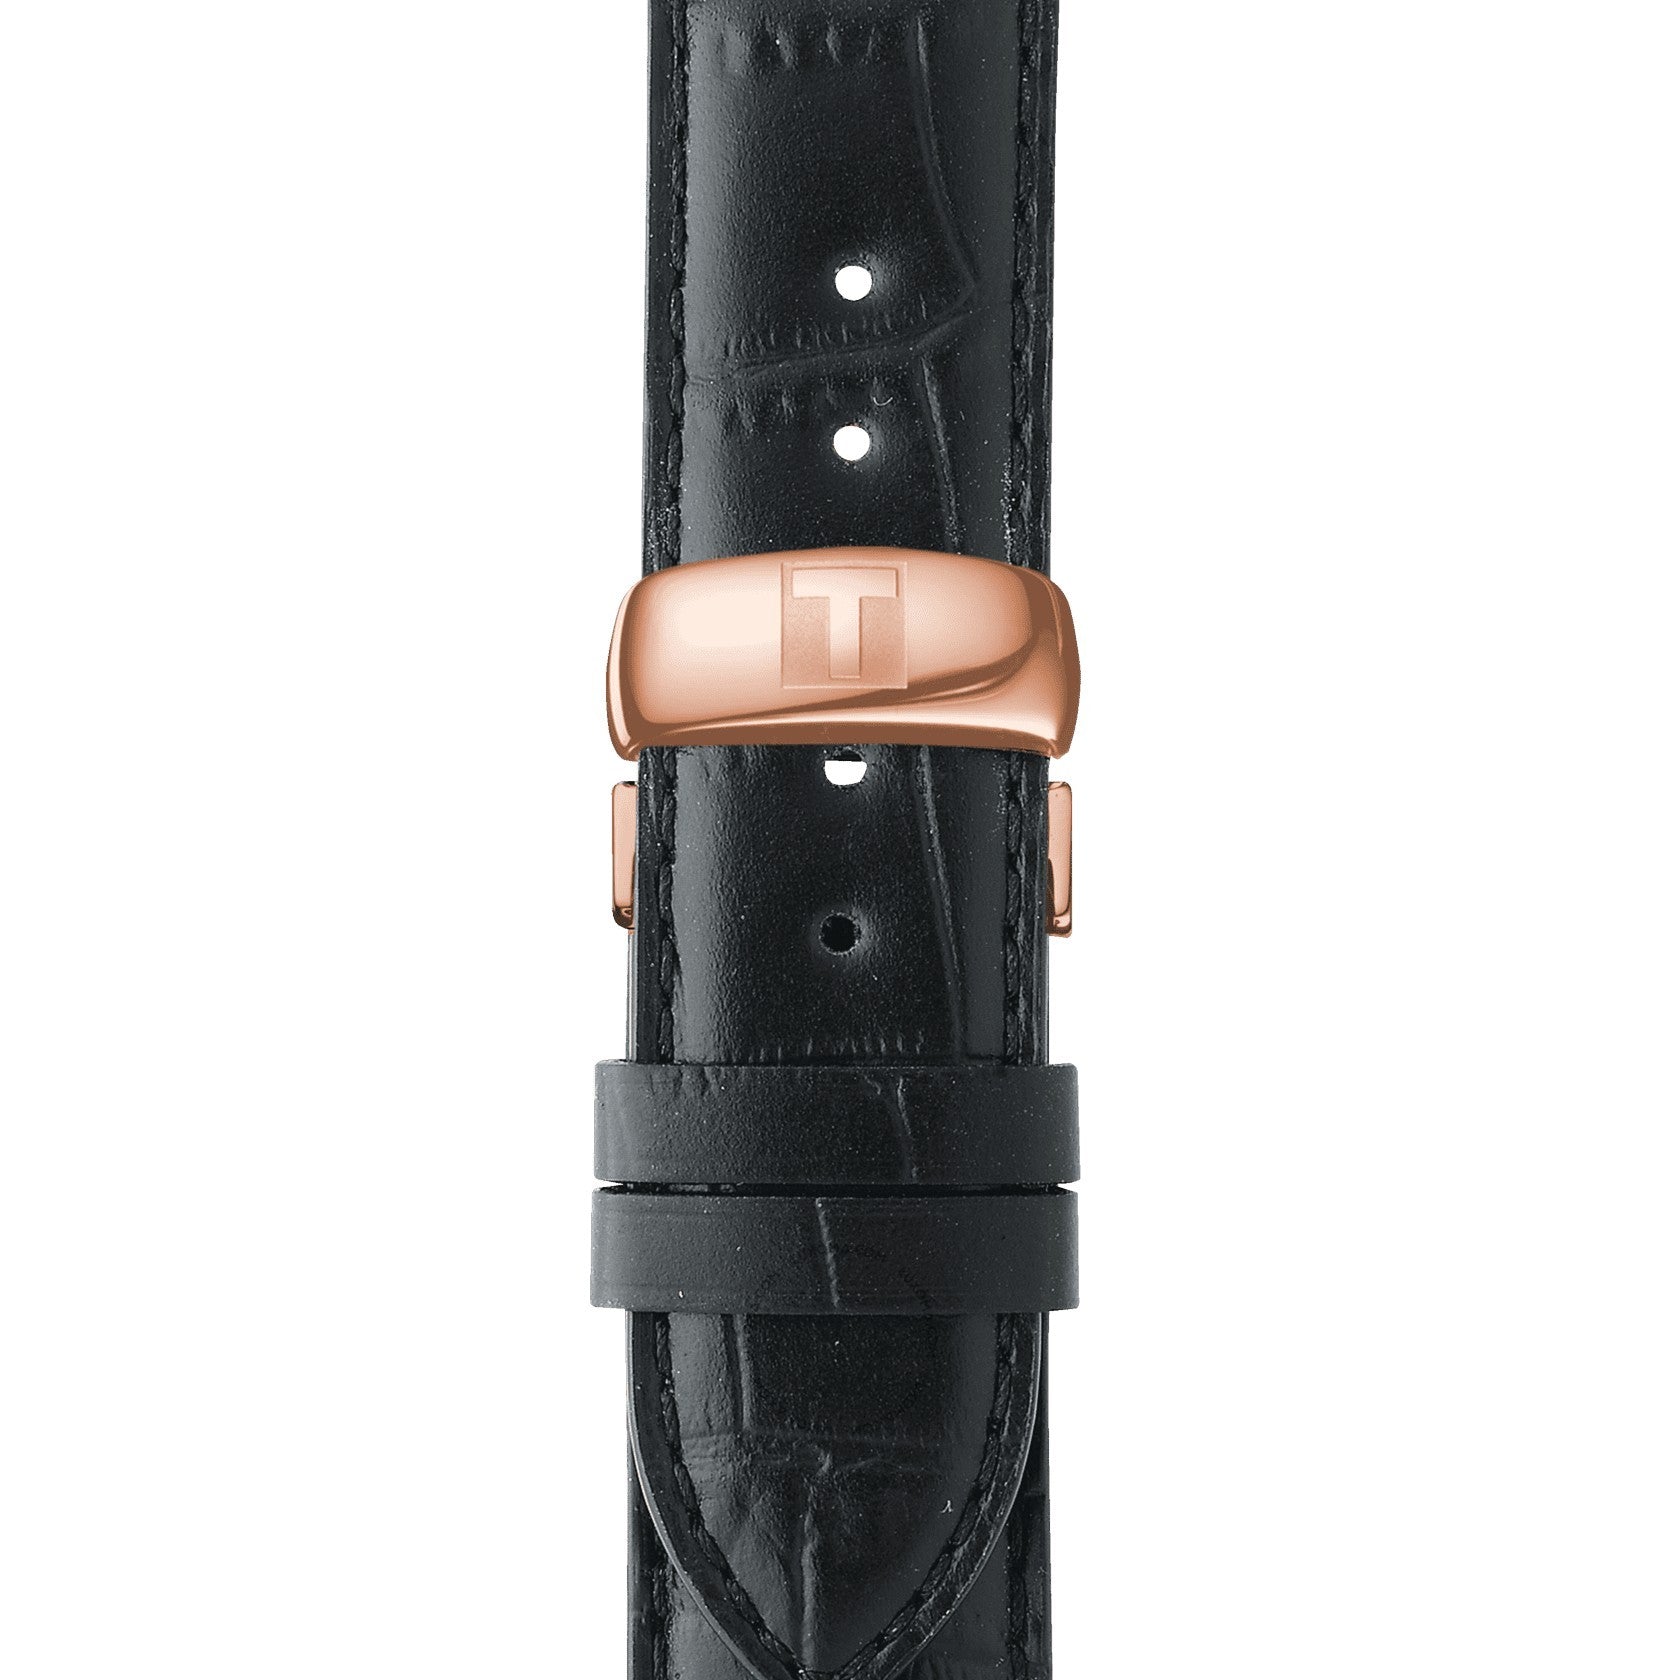 Tissot Tissot T-Classic Automatic Black Dial Men's Watch T006.407.36.053.00